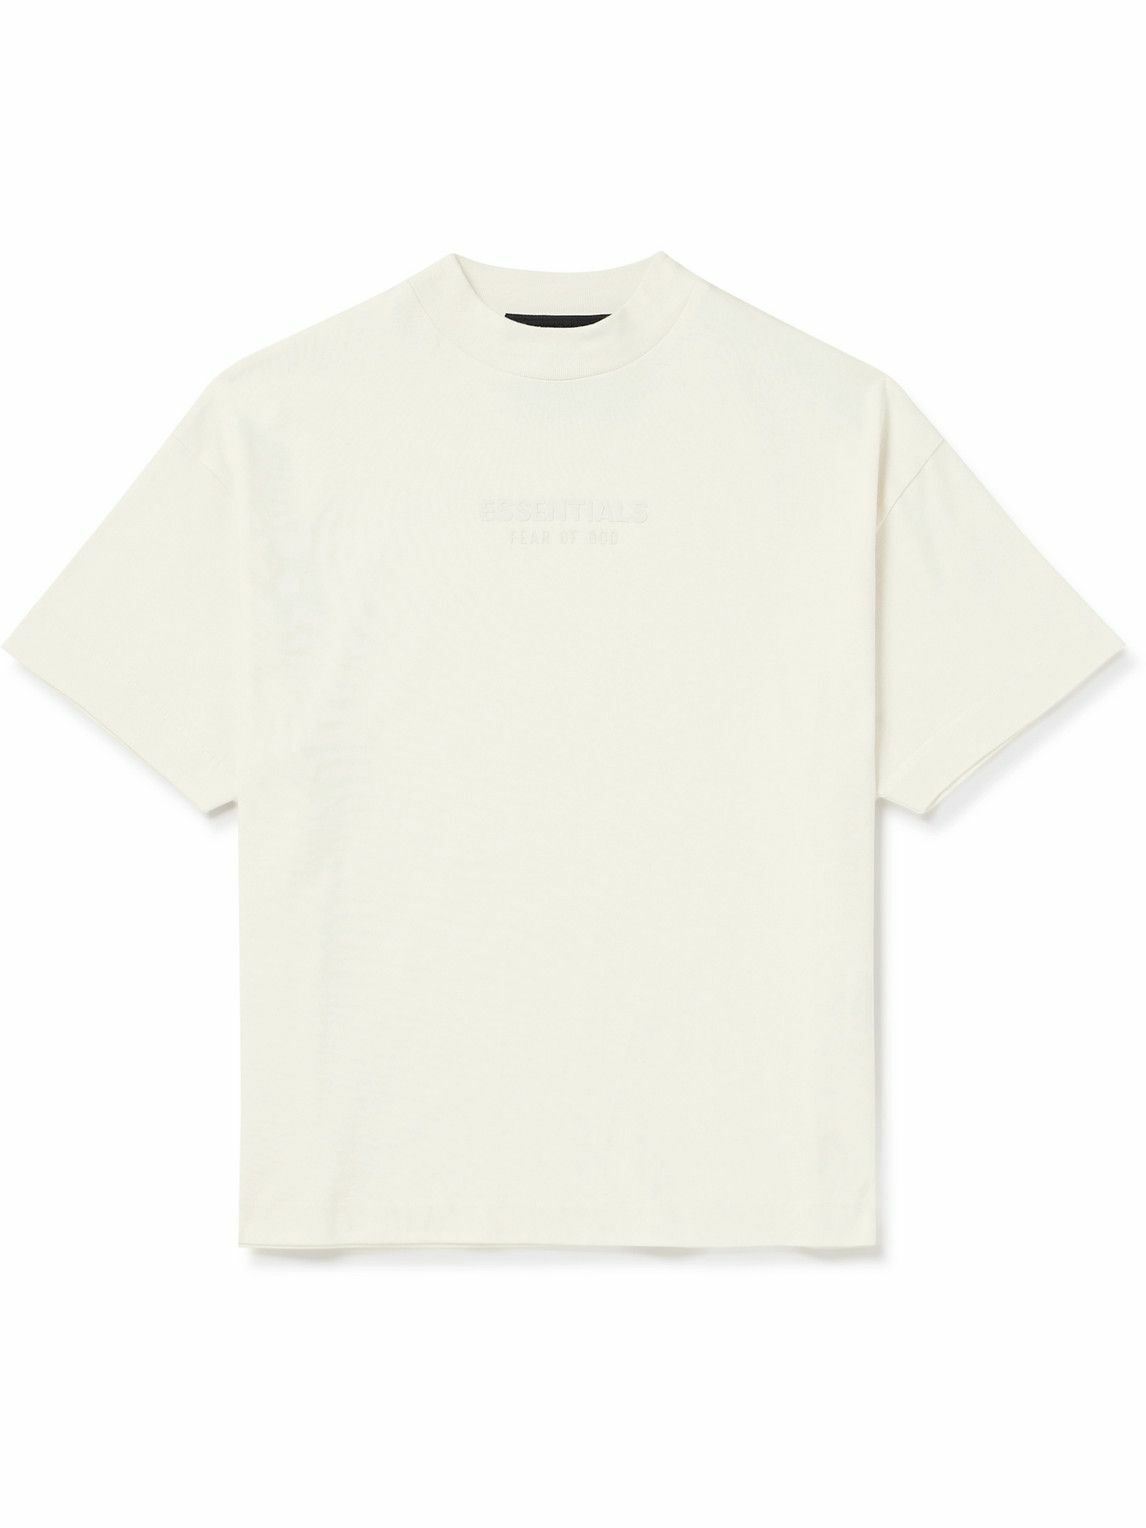 Photo: Fear of God Essentials Kids - Logo-Appliquéd Cotton-Jersey T-Shirt - Neutrals